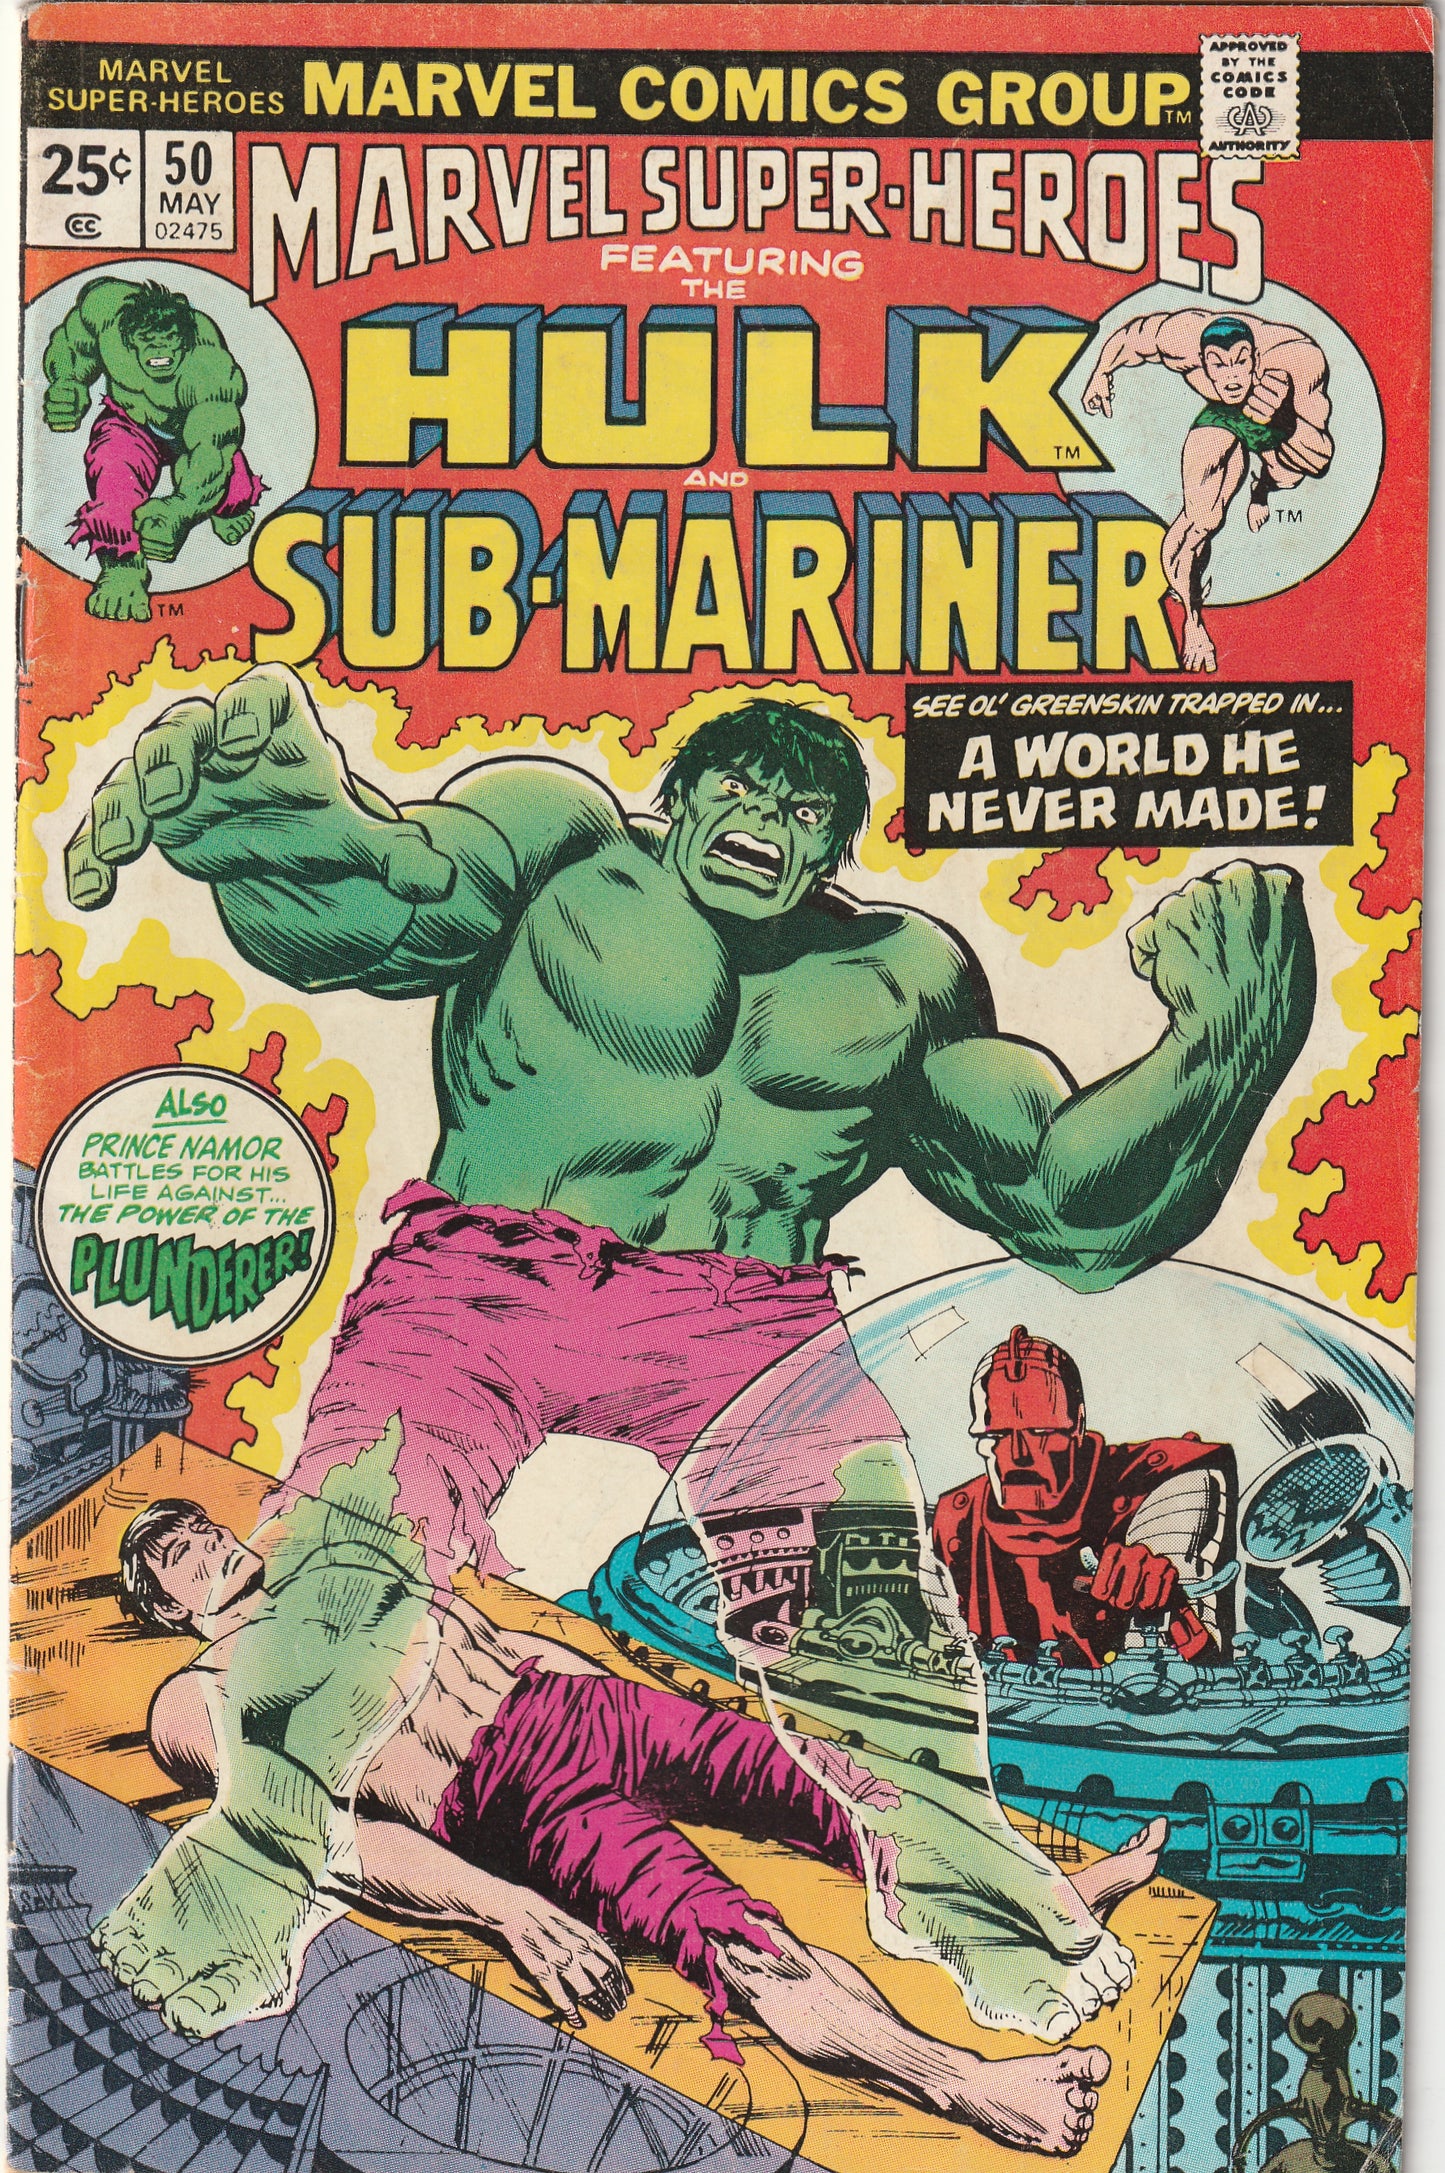 Marvel Super-Heroes #50 (1975) - Reprints Tales to Astonish 95